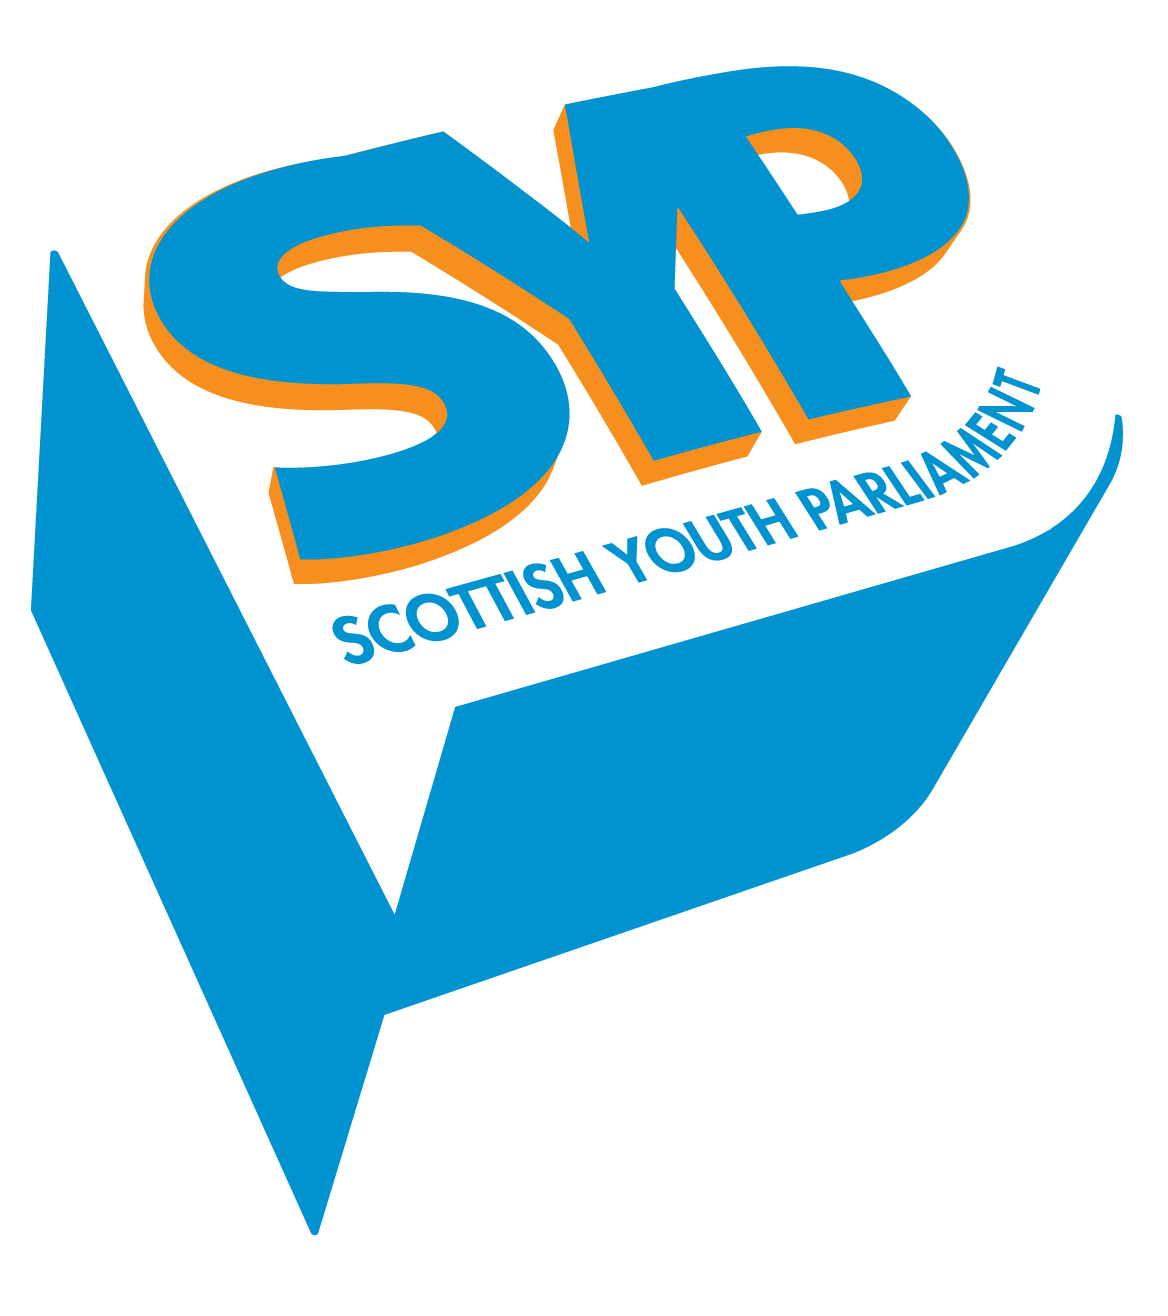 Scottish Youth Parliament Logo